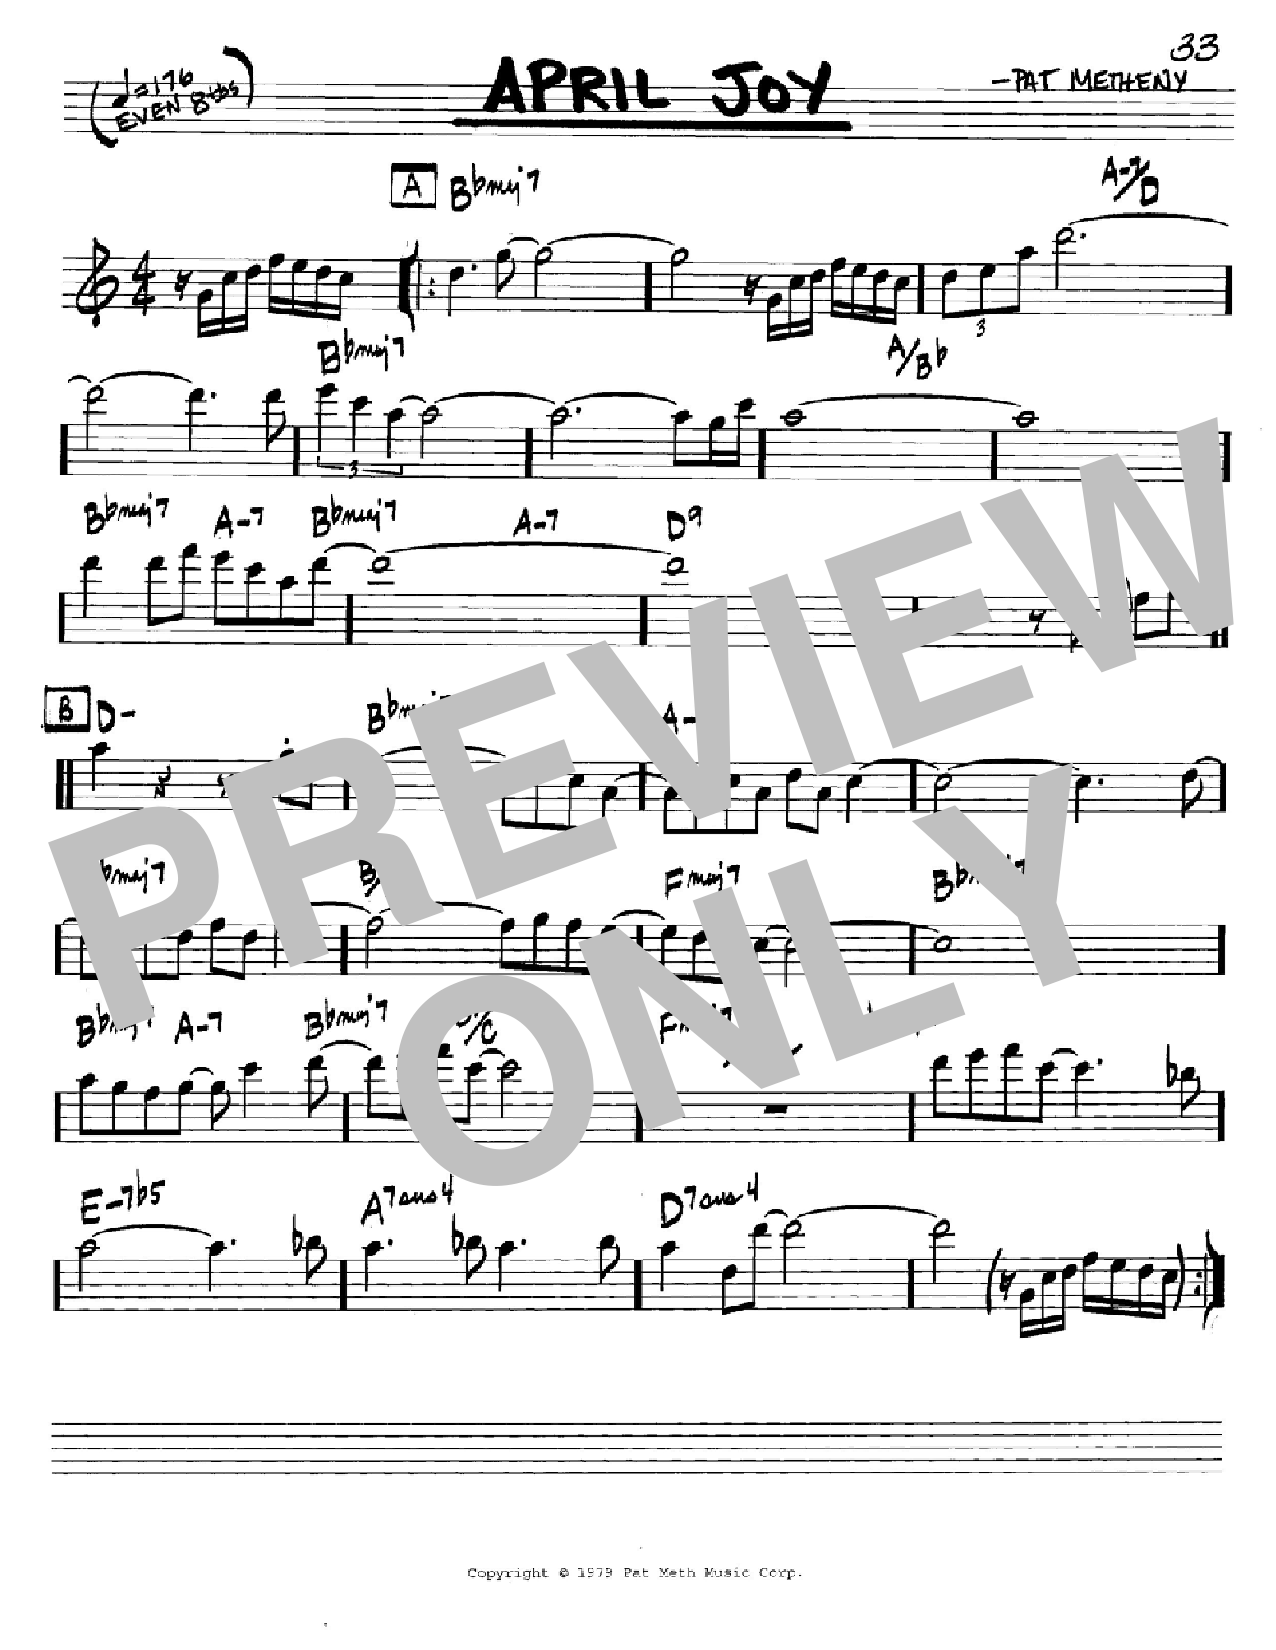 Pat Metheny April Joy Sheet Music Notes & Chords for Real Book - Melody & Chords - C Instruments - Download or Print PDF